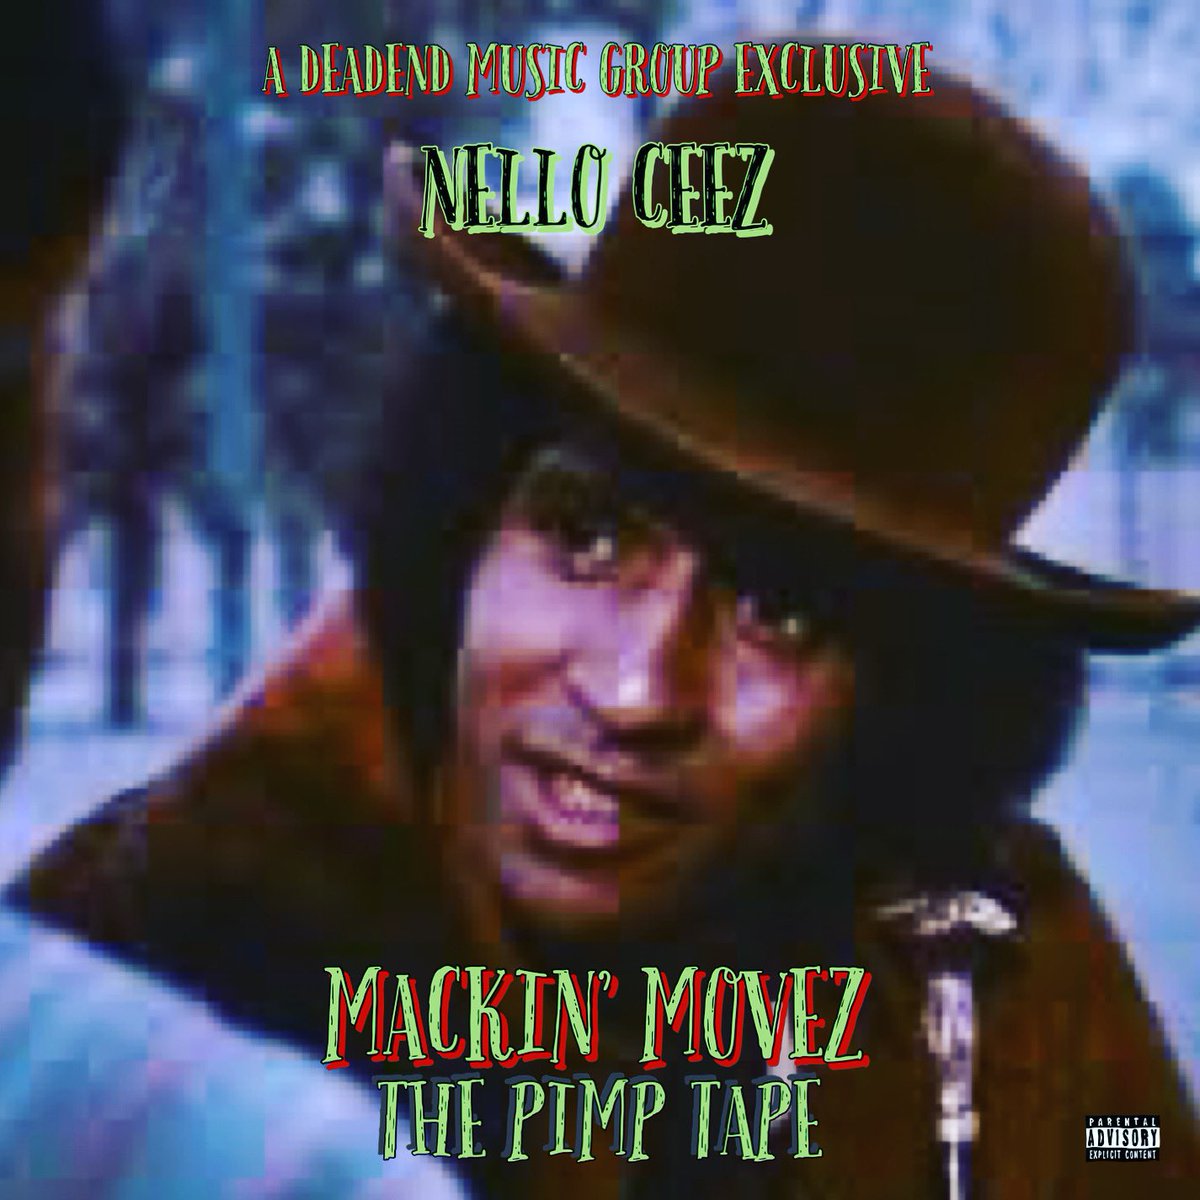 Mackin’ Movez #baby Da Know How (Prod. by G$V) by Nello aka Ceez on #SoundCloud 
on.soundcloud.com/xkDK1AtZTeyArp… #gamer #viralvideo #chicago #JourneyToGold